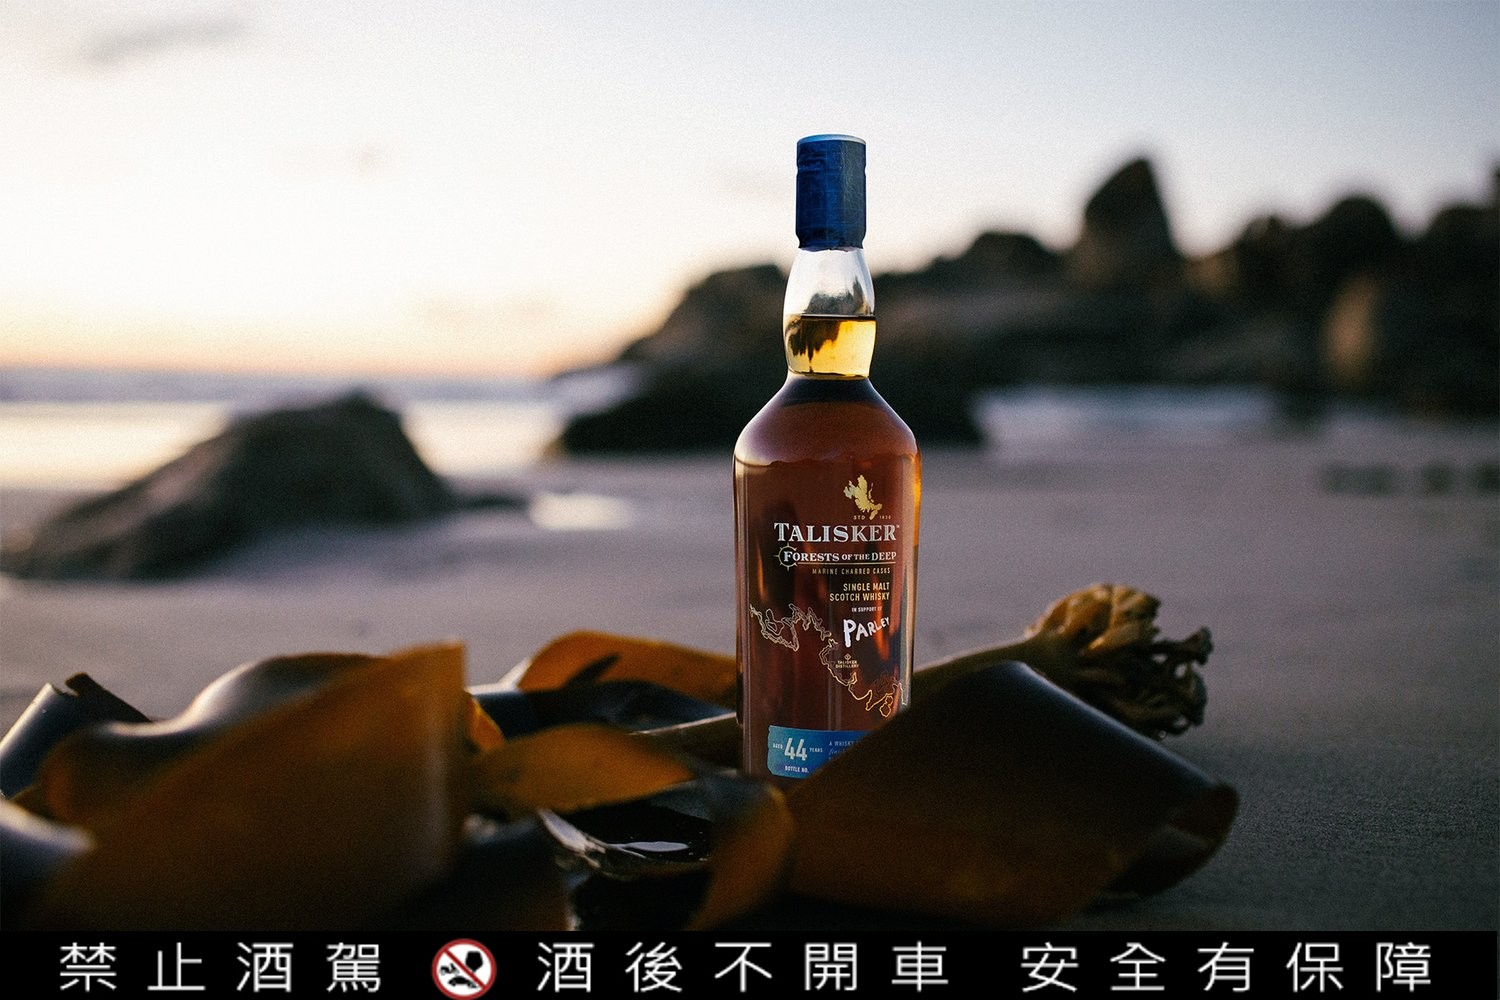 【#Wine & Spirits】 Talisker攜手海洋環保組織Parley推出聯名限量版單一麥芽威士忌，利用蓬勃永續精神守望海洋生態